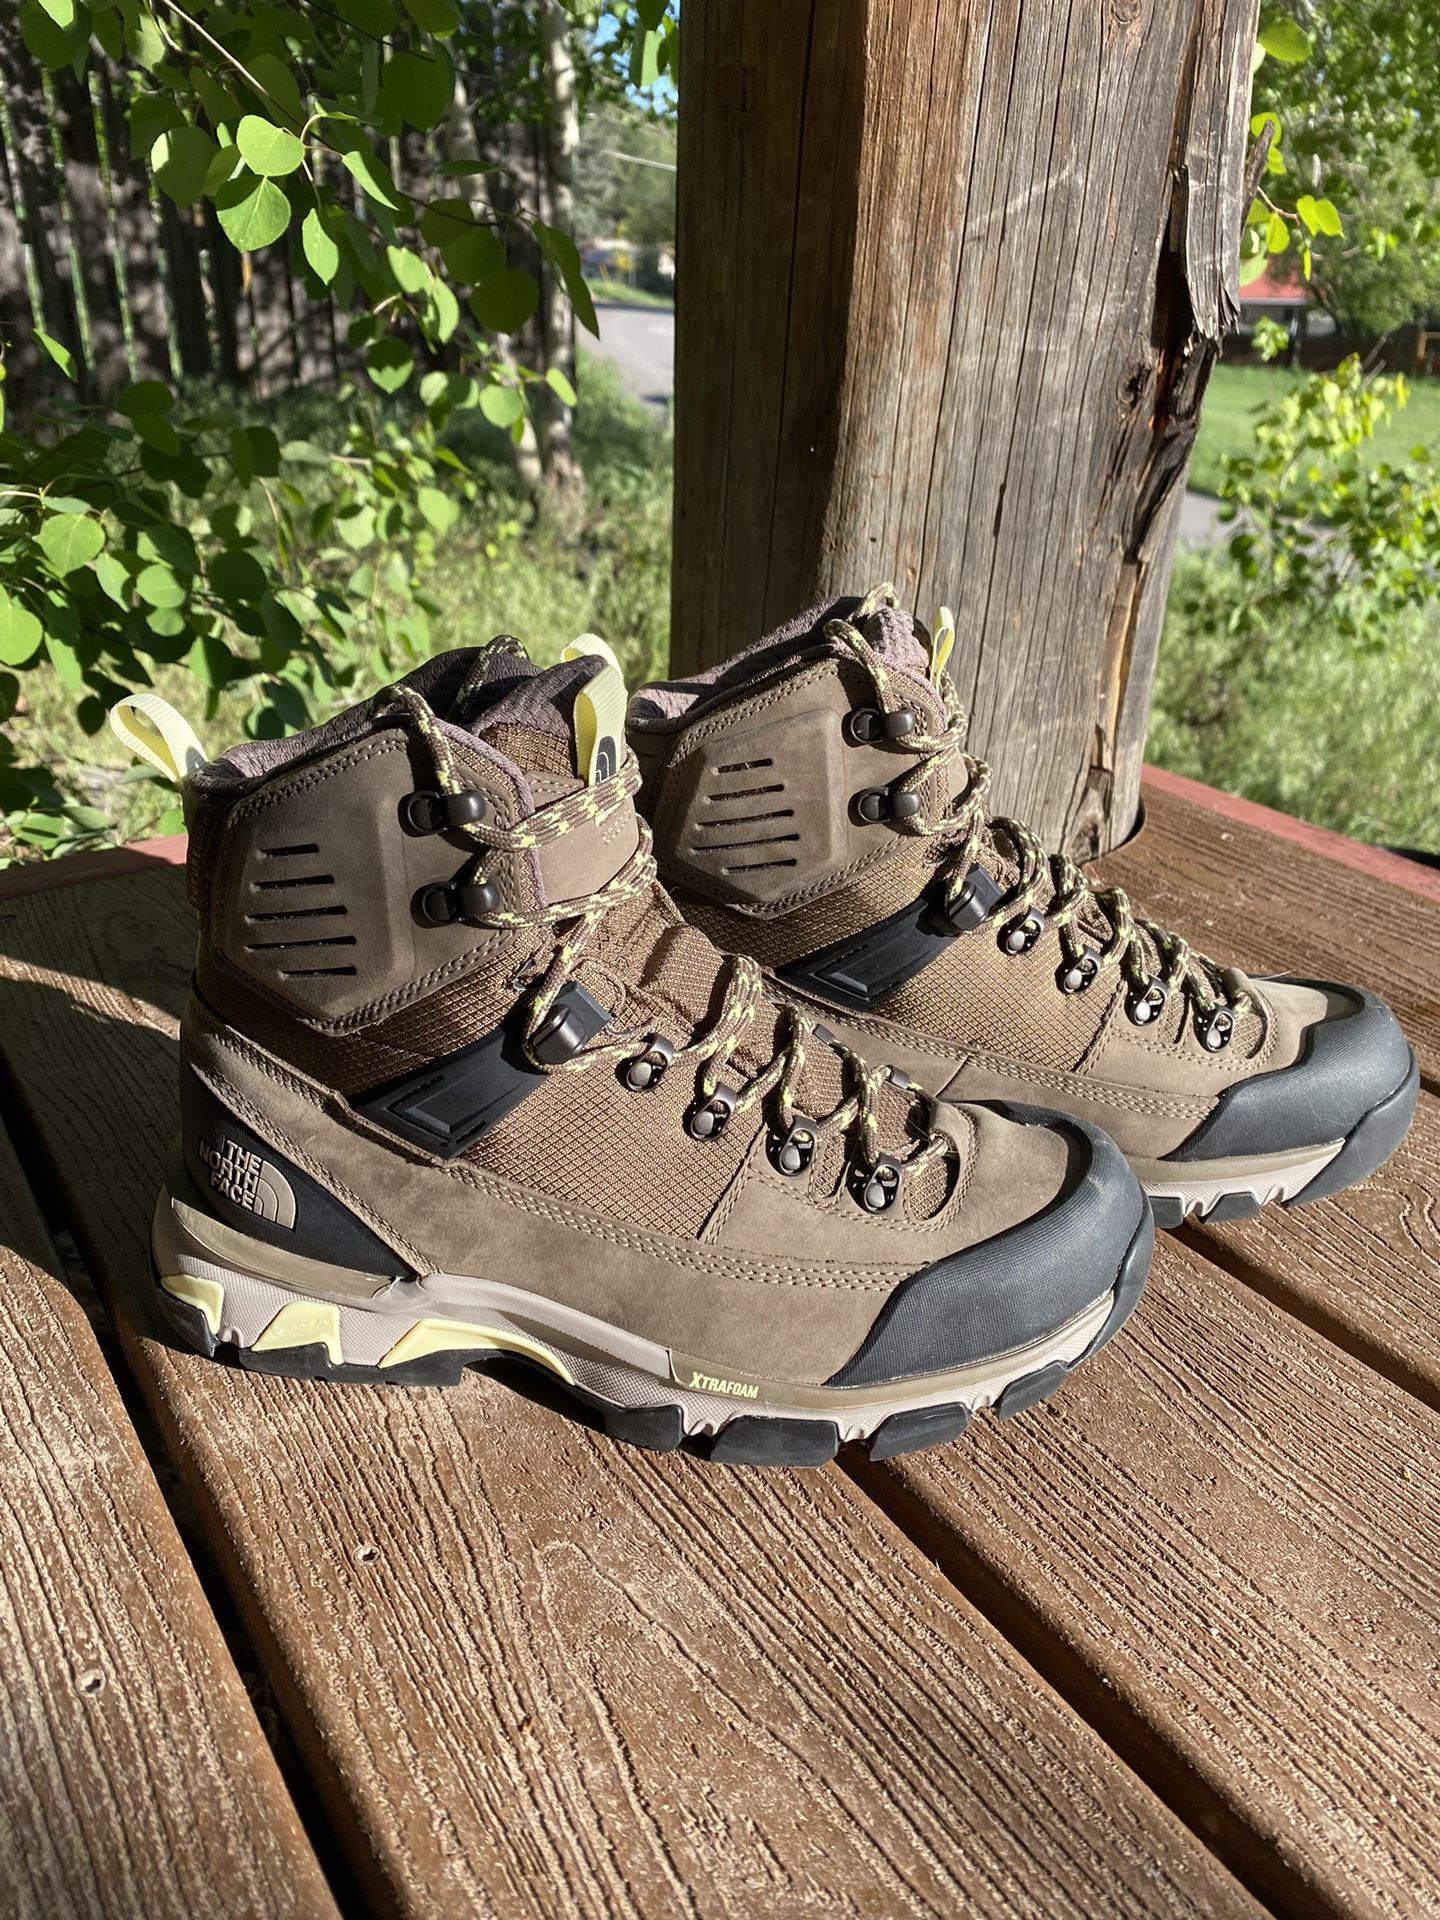 Northface Hiking Boots Women size 7